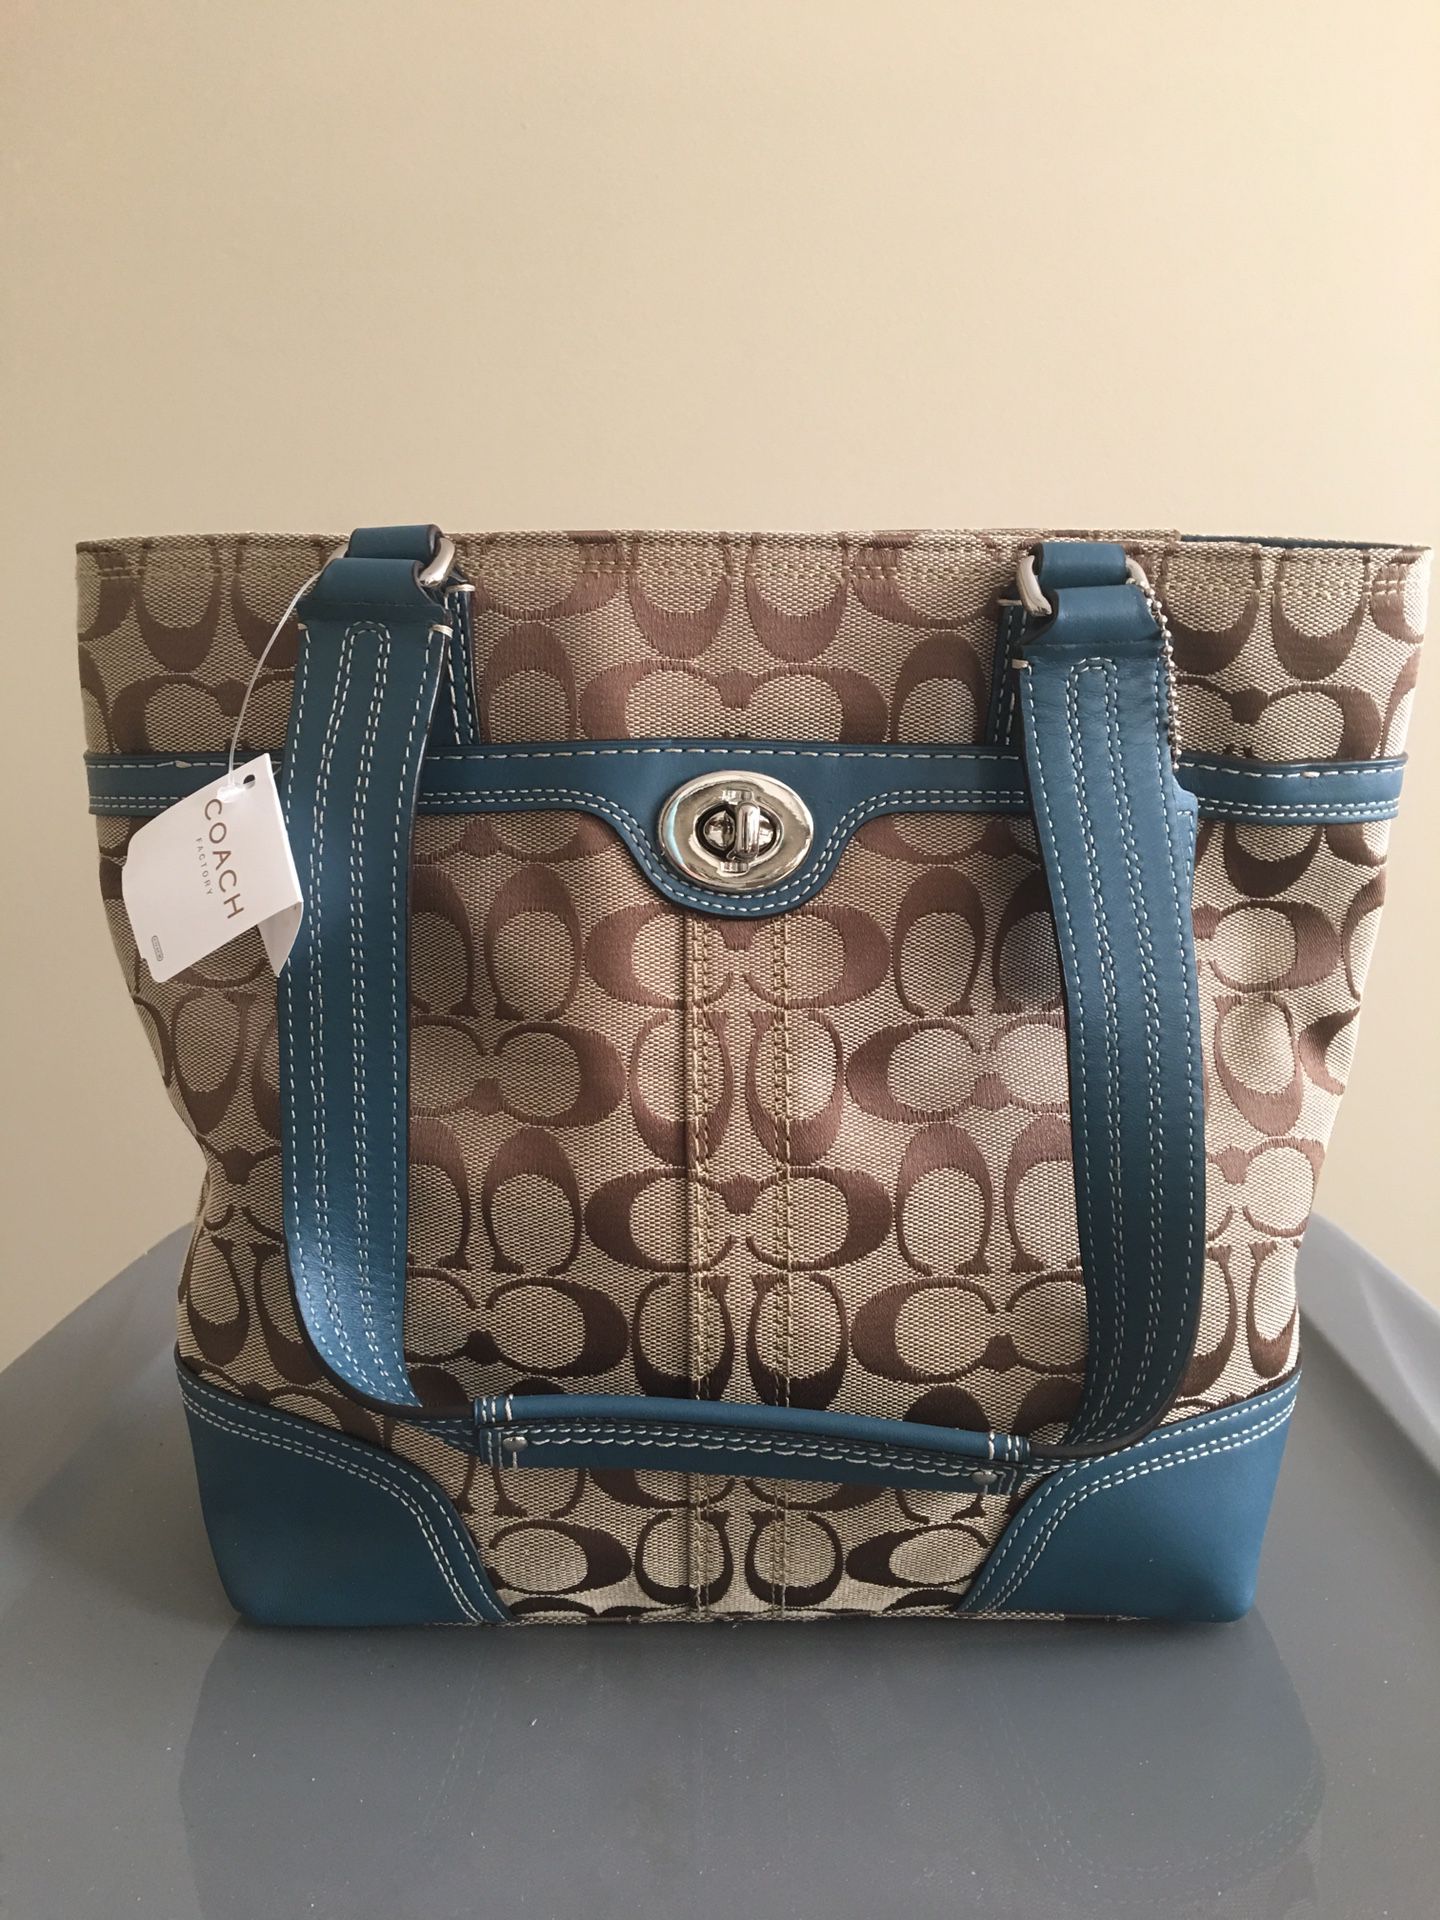 Ladies coach Tote bag. / purse brand new $60